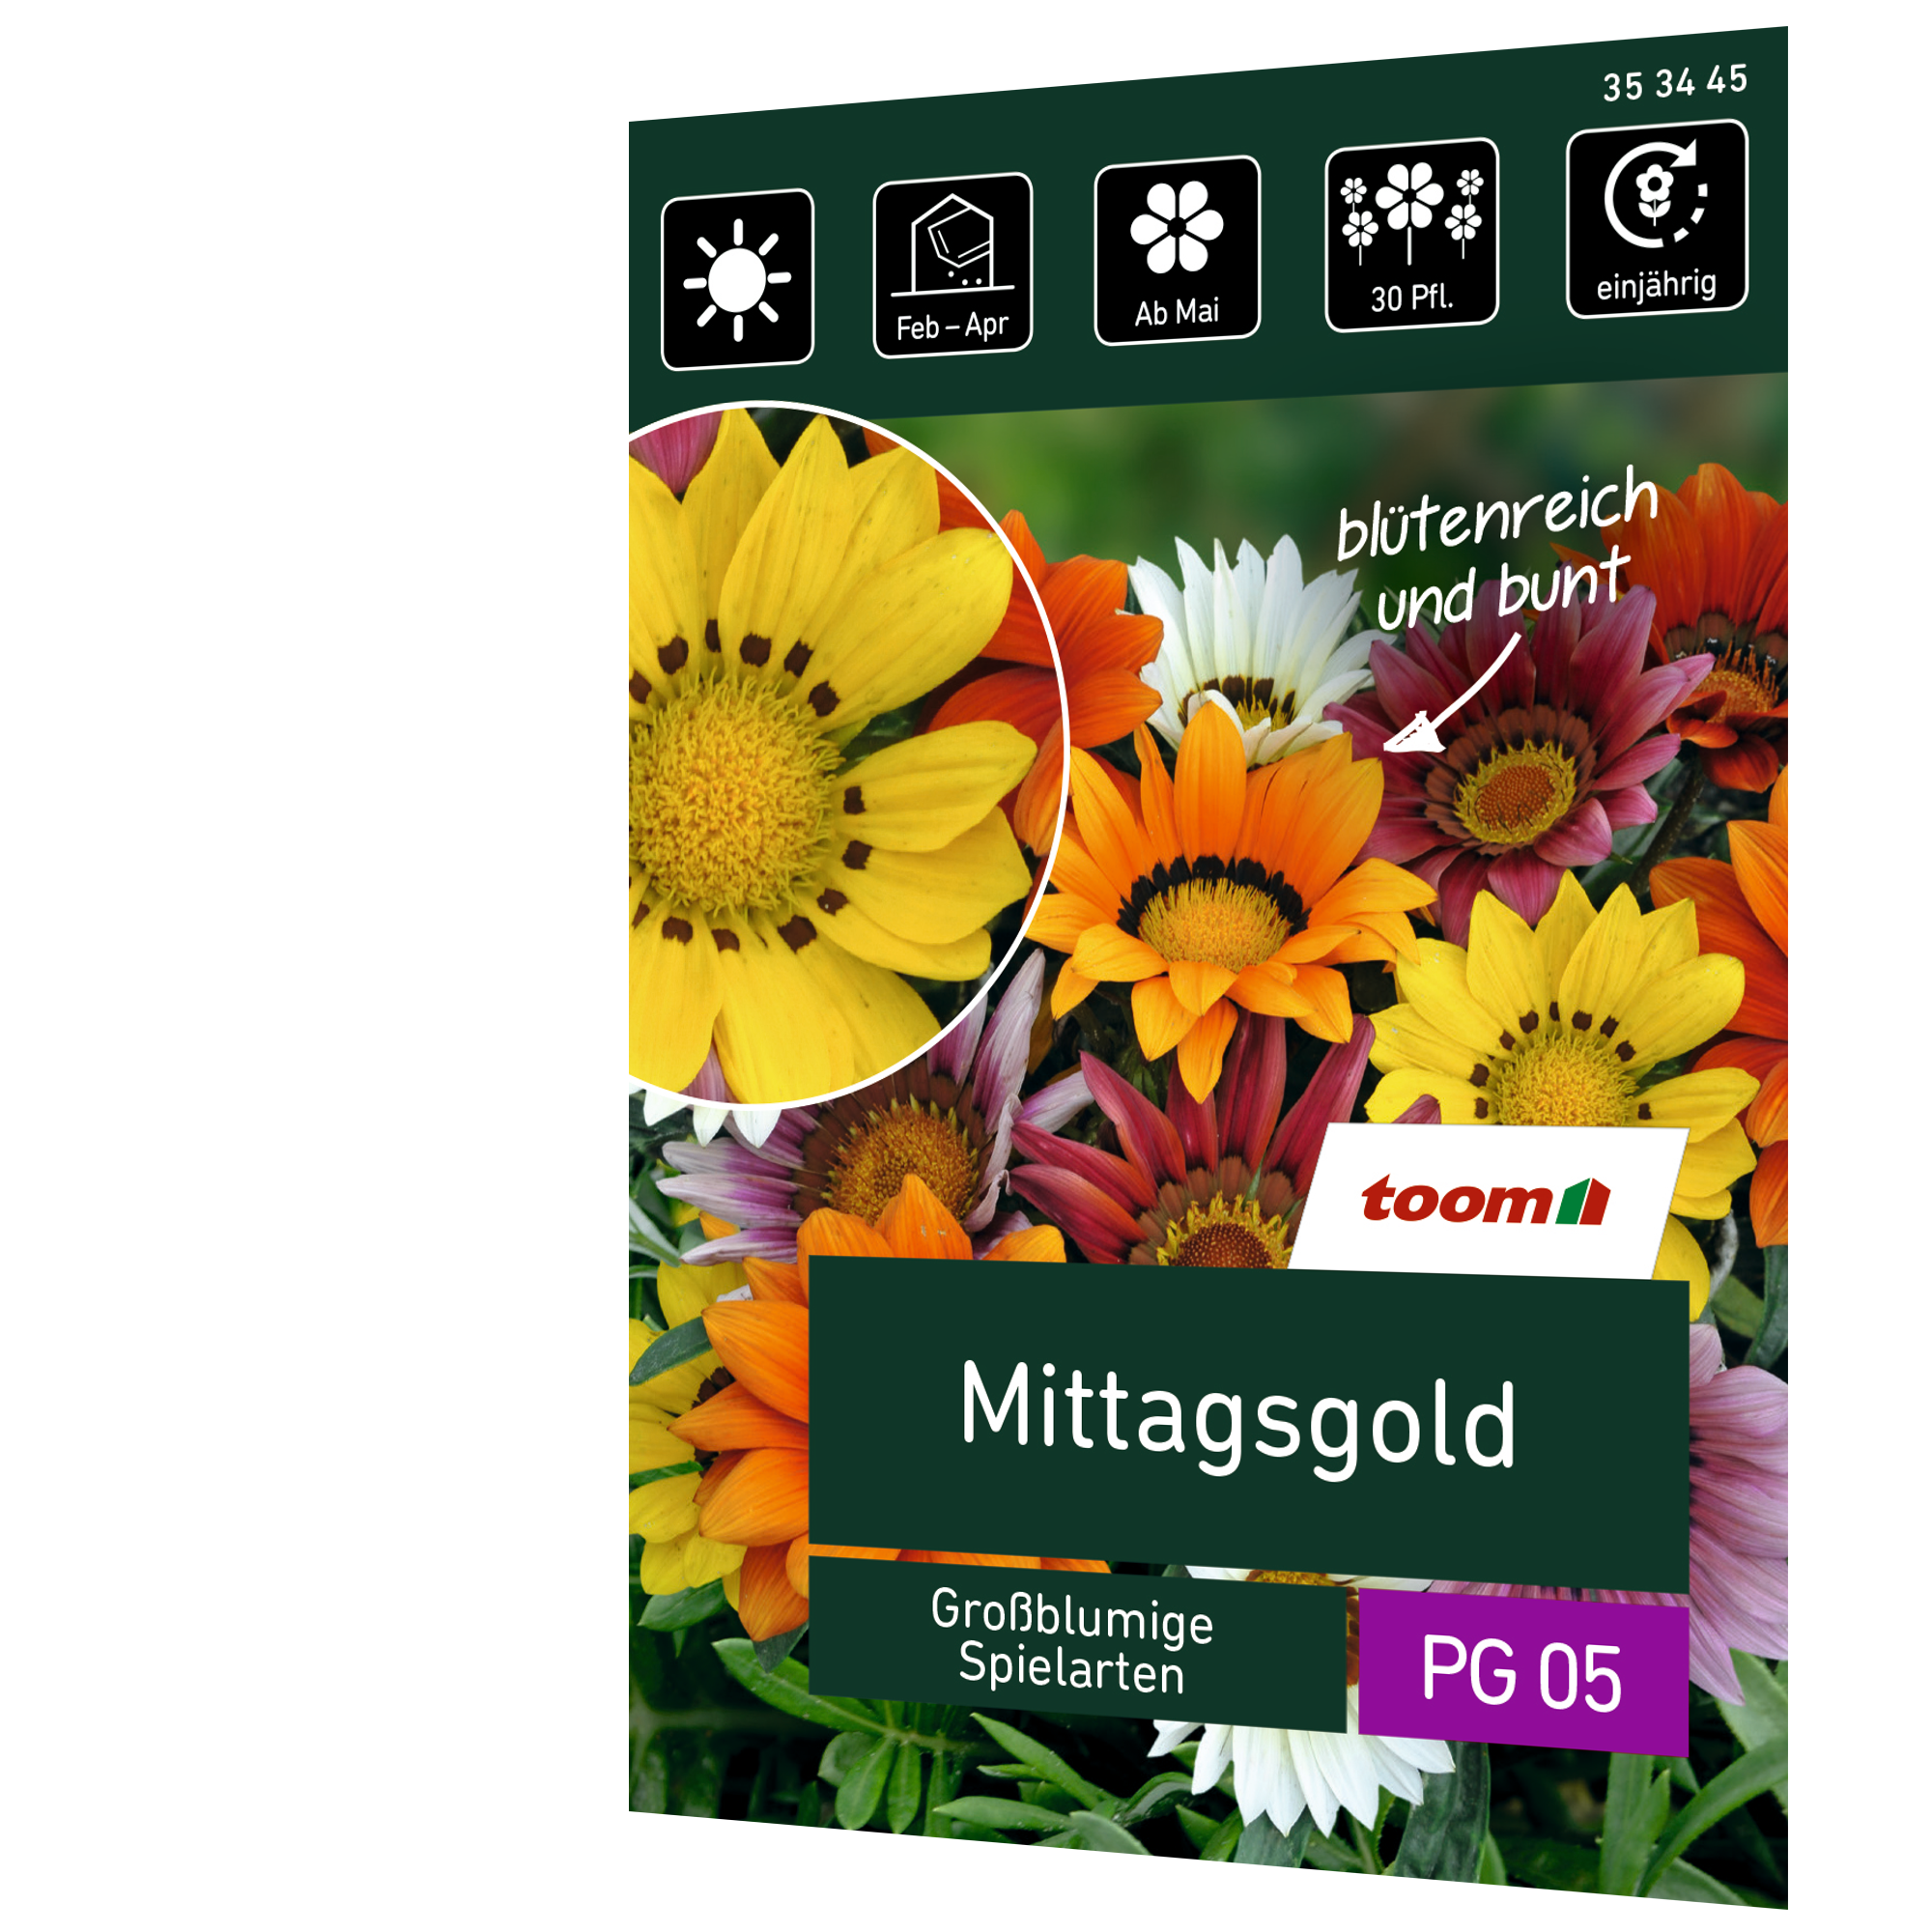 Mittagsgold 'Großblumige Spielarten' + product picture